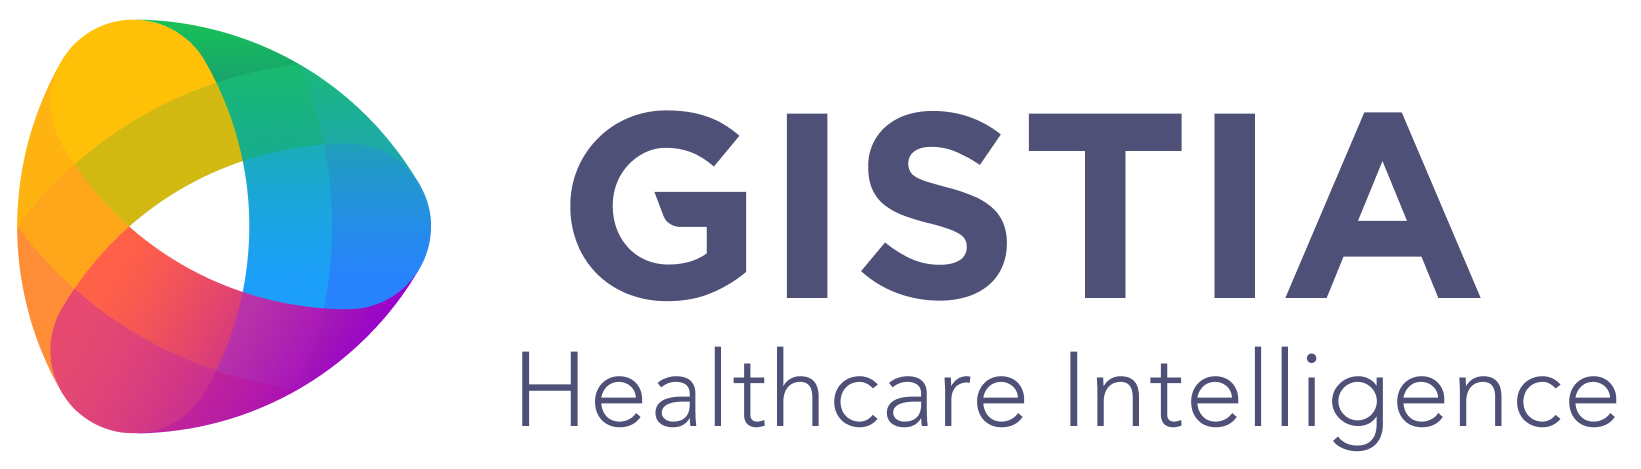 Gistia Healthcare Intelligence - Purple Text